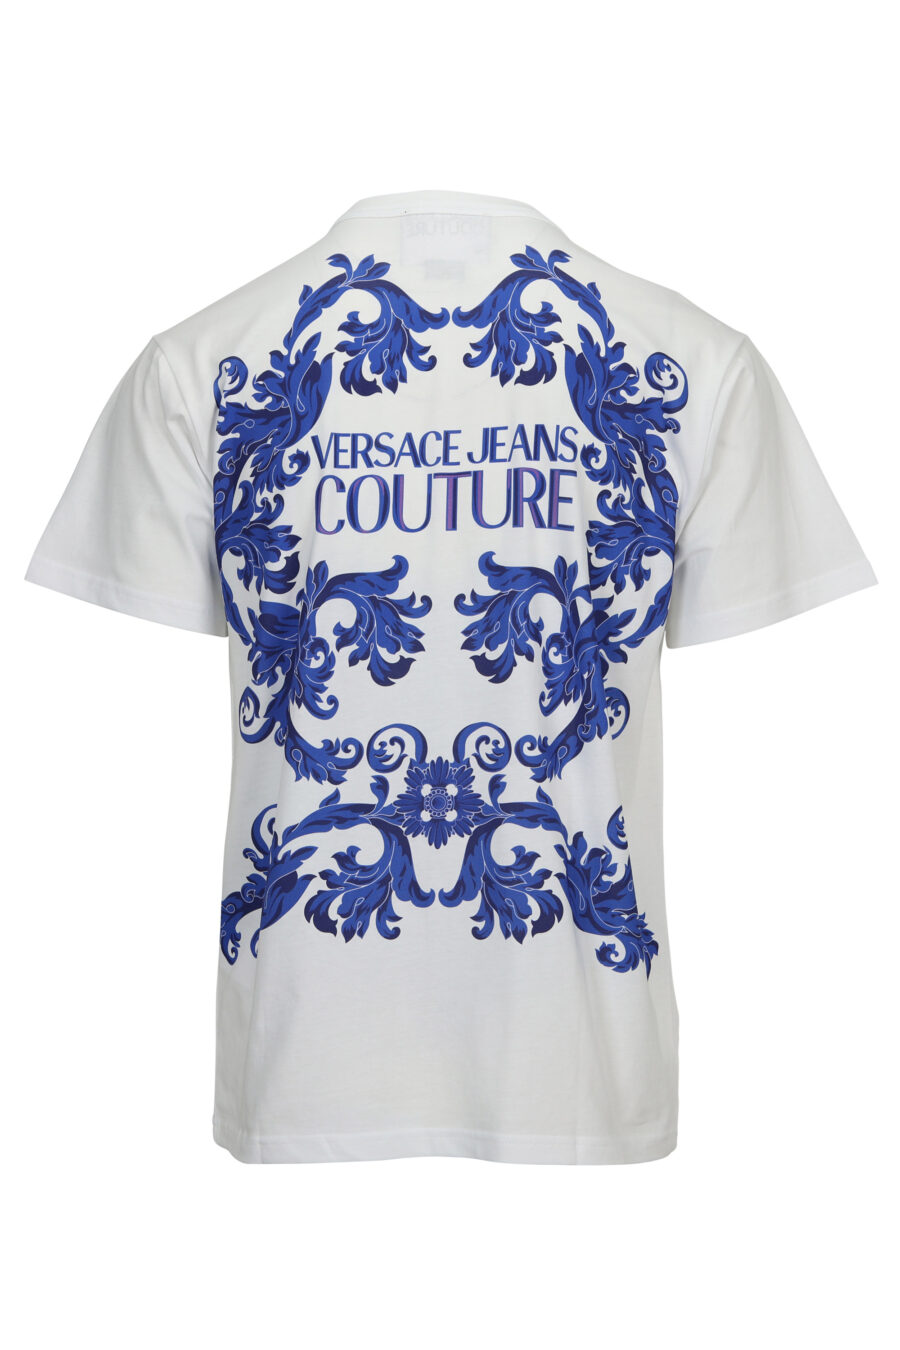 T-shirt blanc avec poche logo baroque bleu - 8052019611250 1